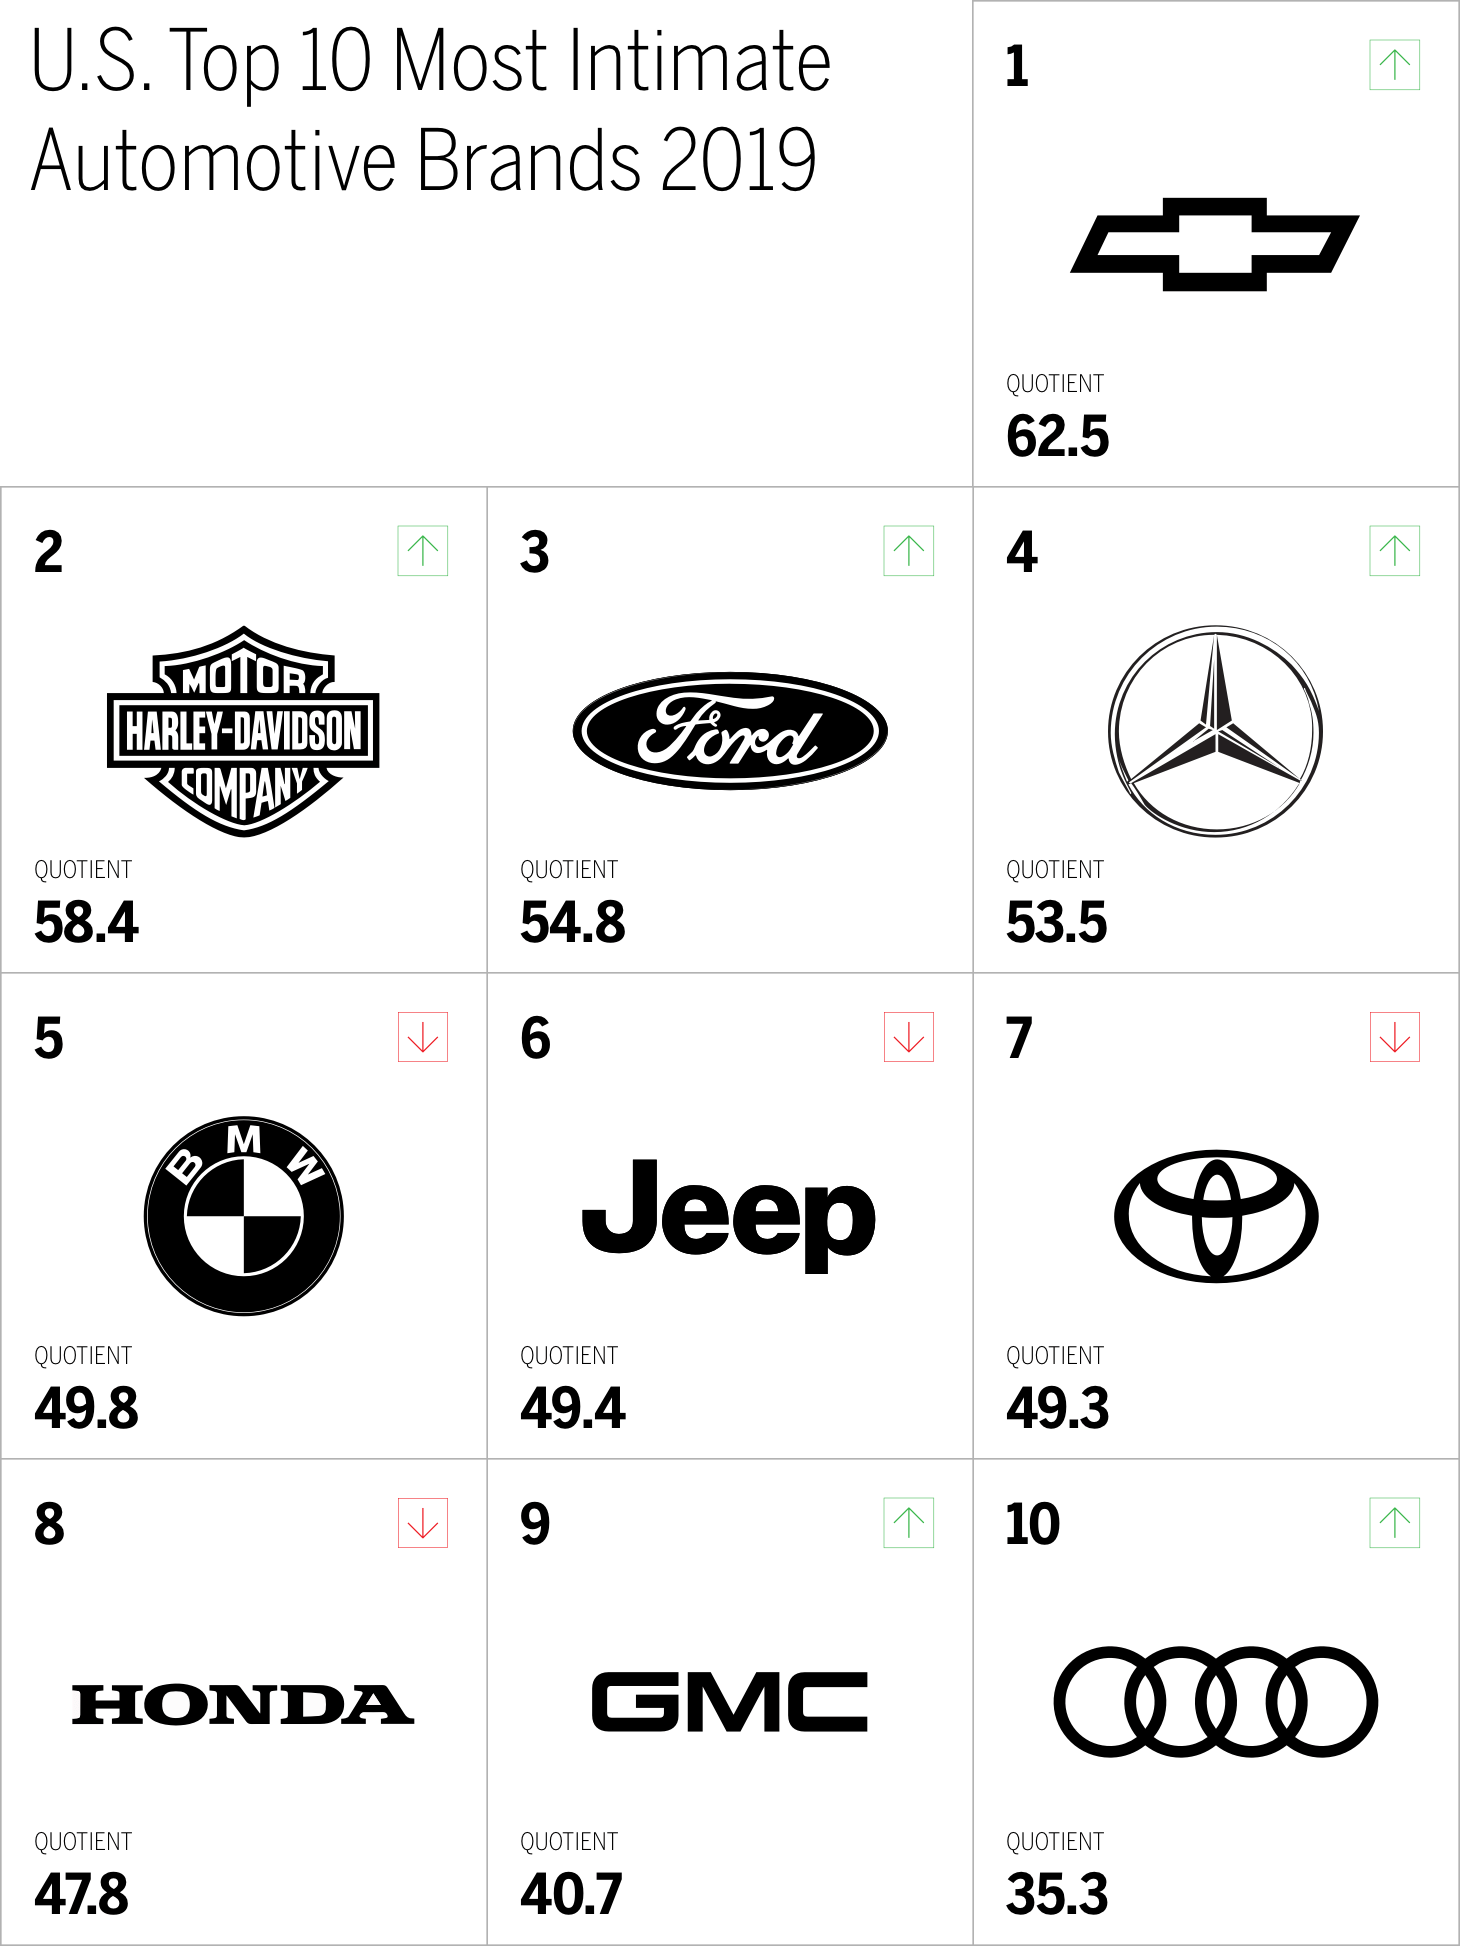 U.S. Top 10 Most Intimate
Automotive Brands 2019 Chart